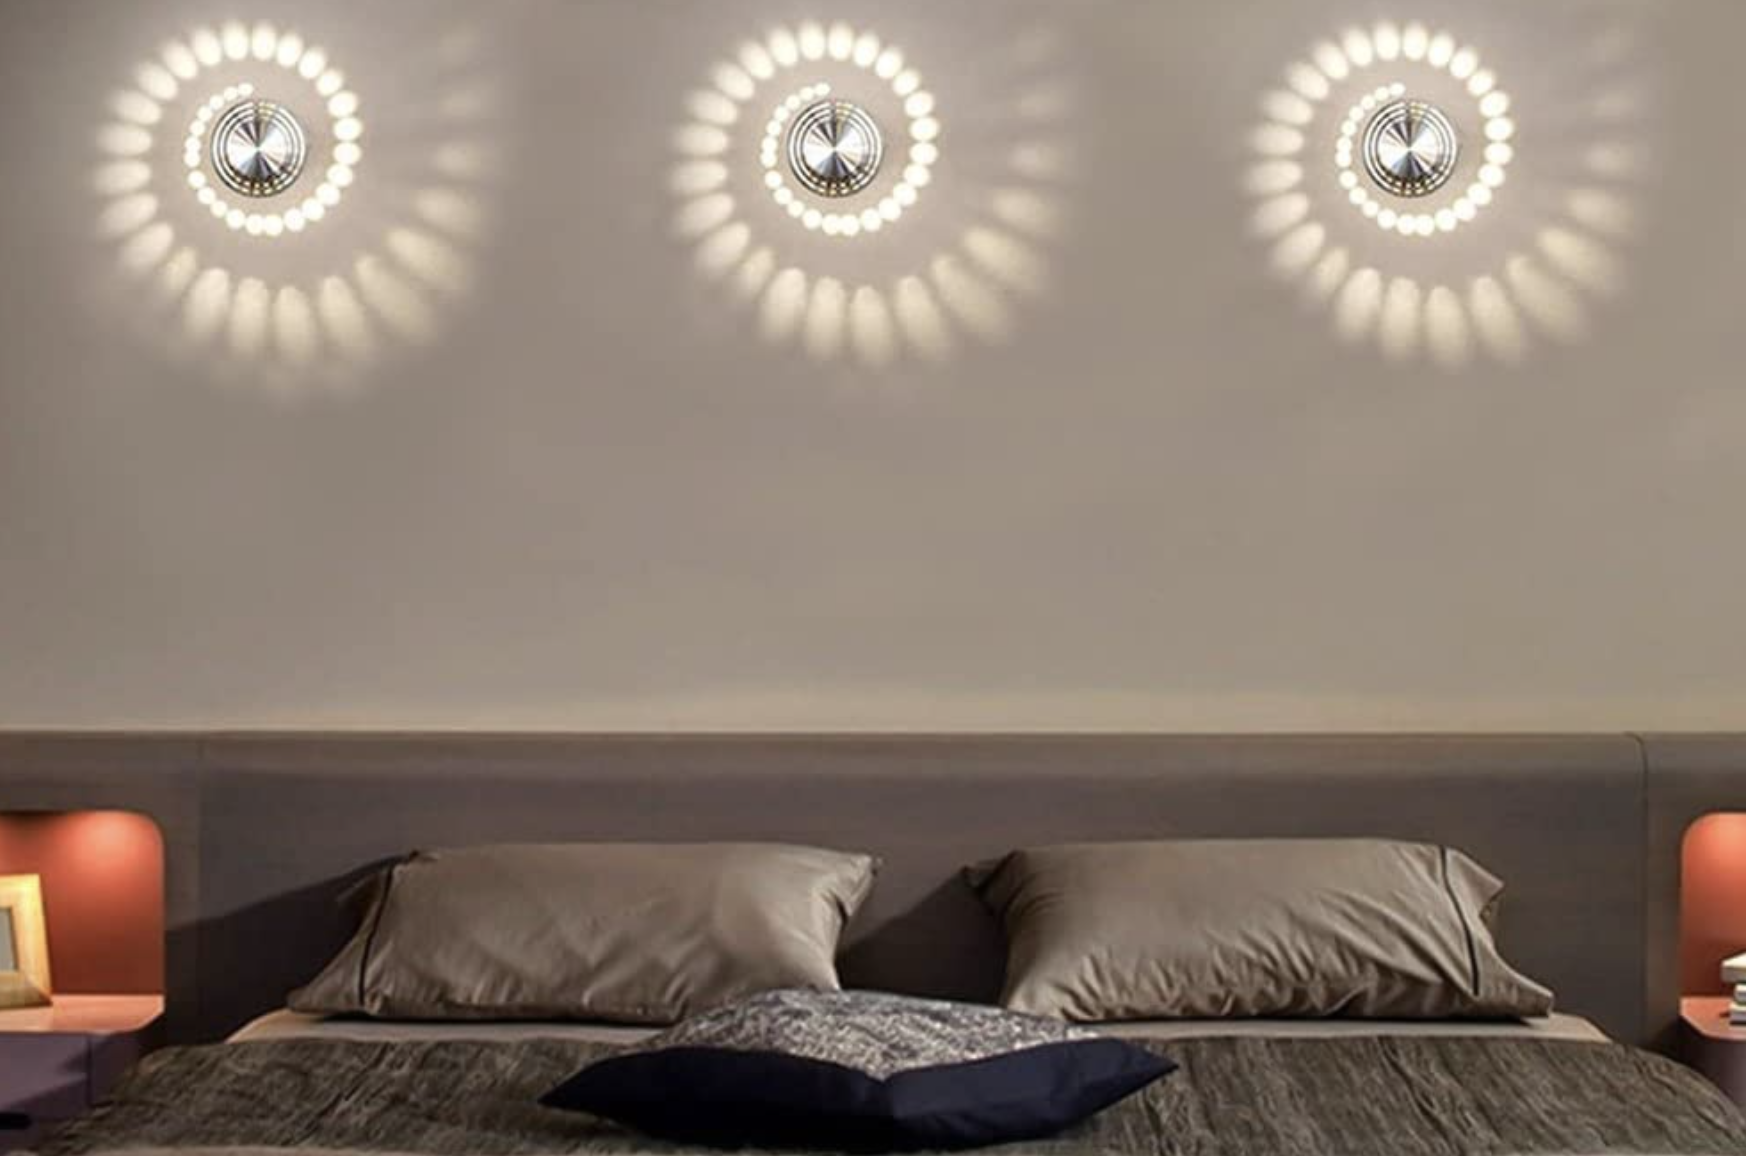 Creative bedroom lighting ideas to brighten up your space